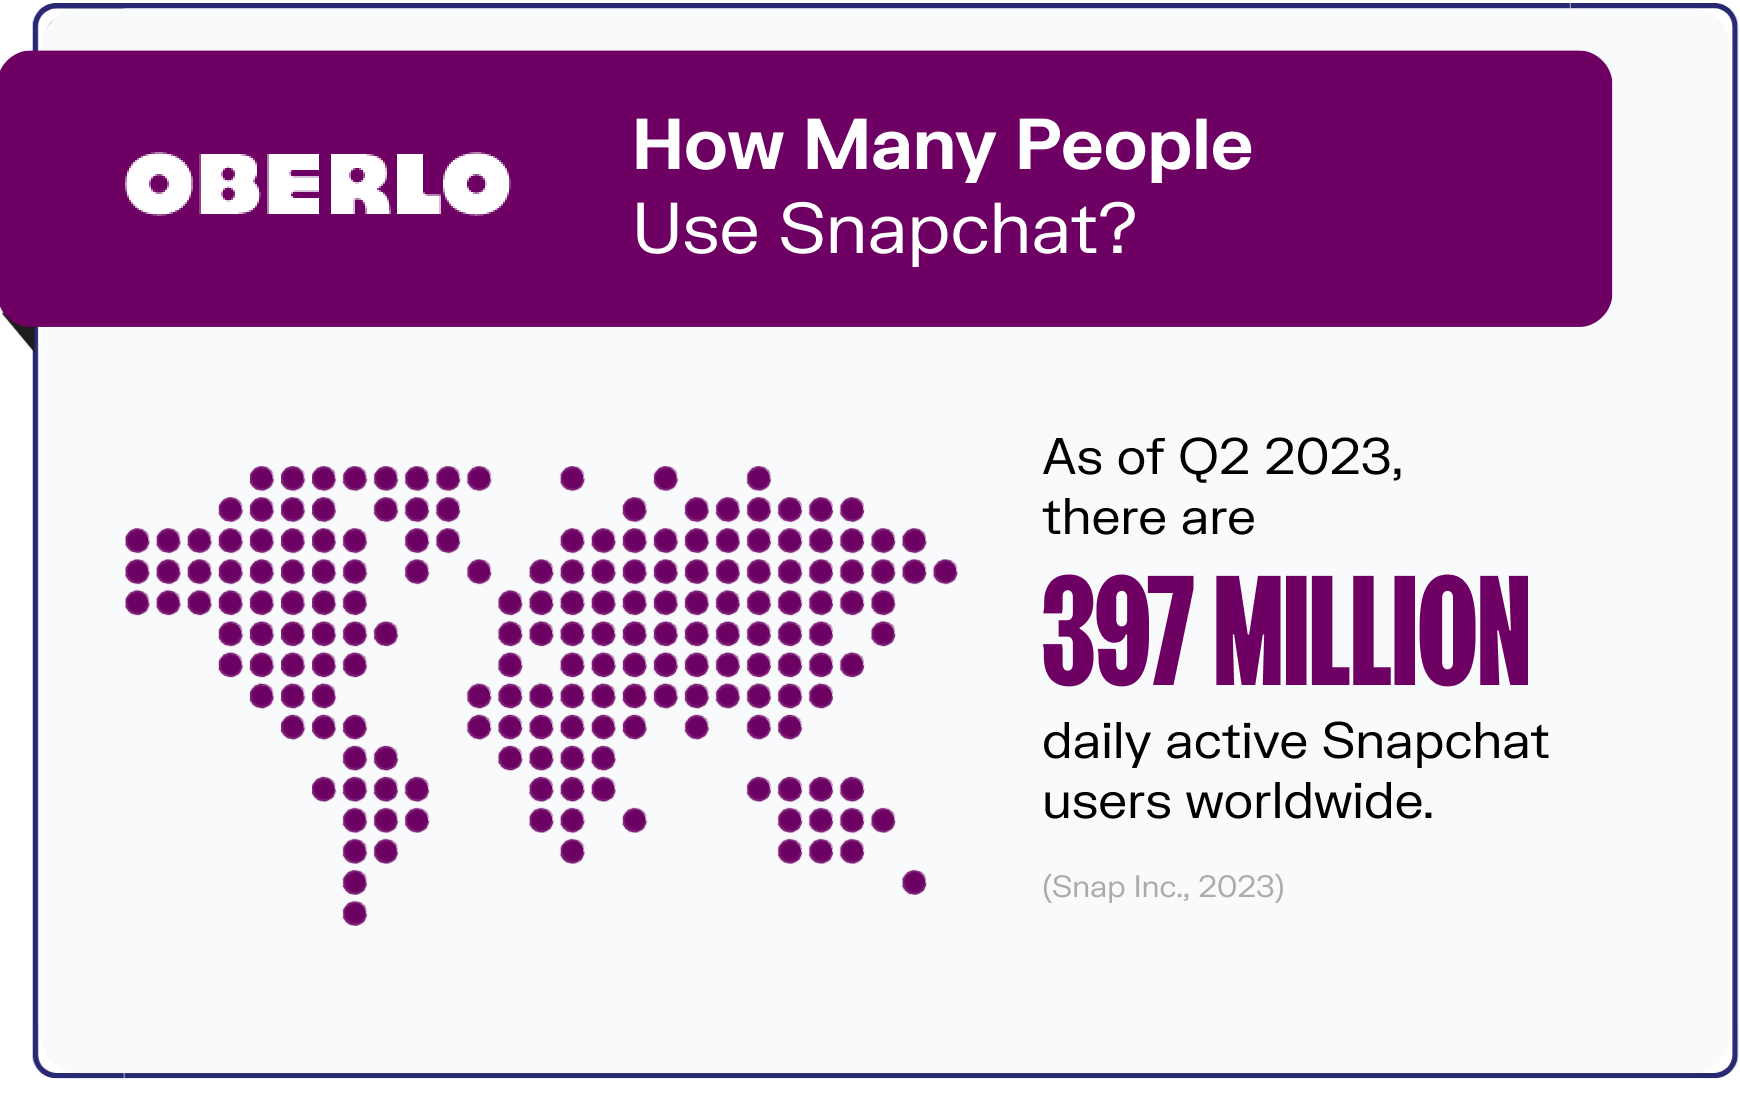 snapchat statistics graphic1